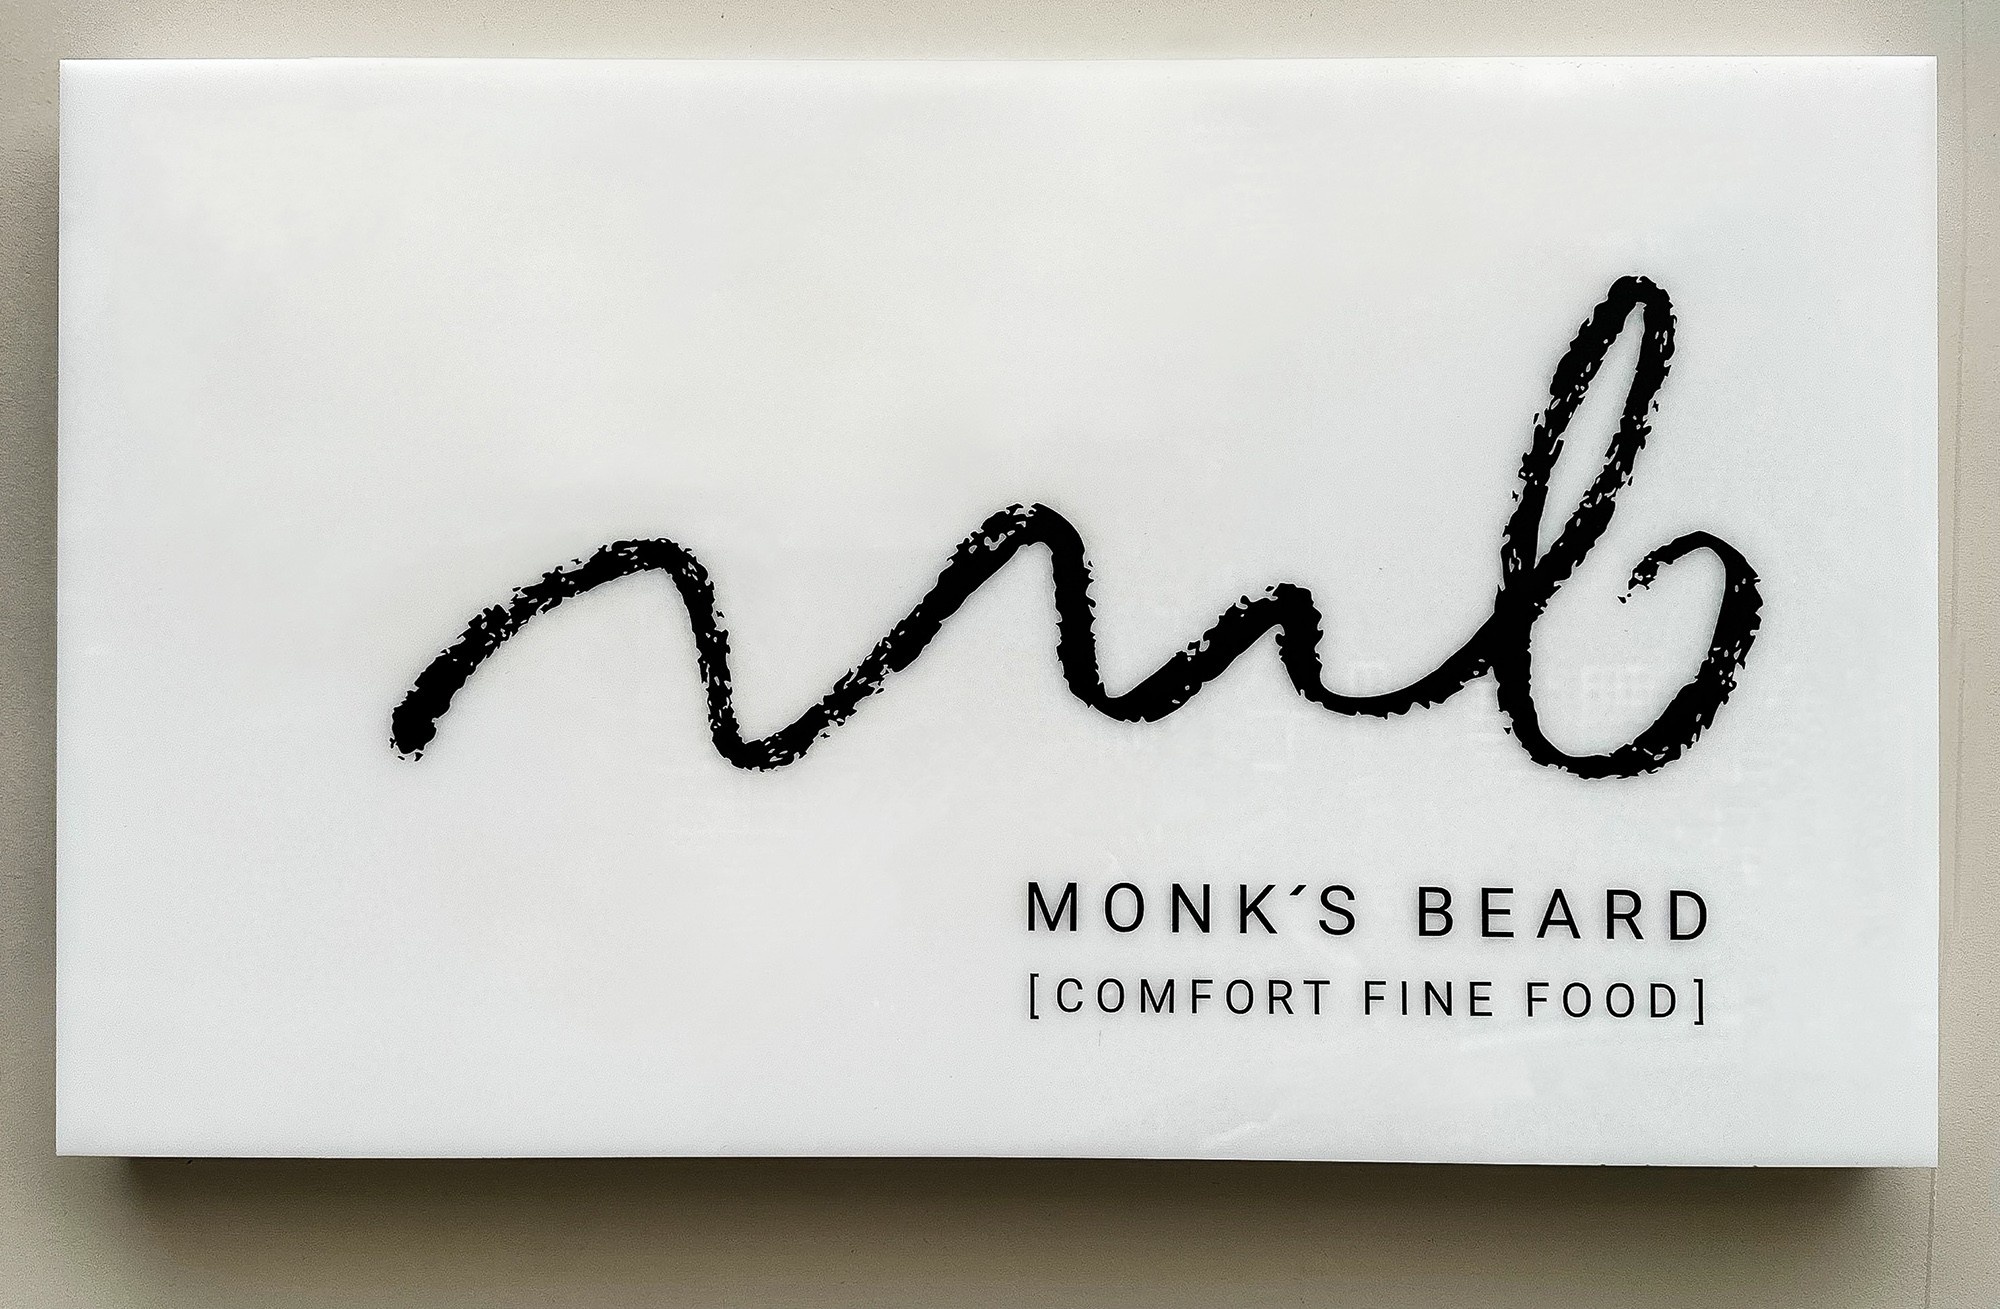 Monk’s Beard: Μια εμπνευσμένη εμπειρία comfort fine food στα κάρβουνα